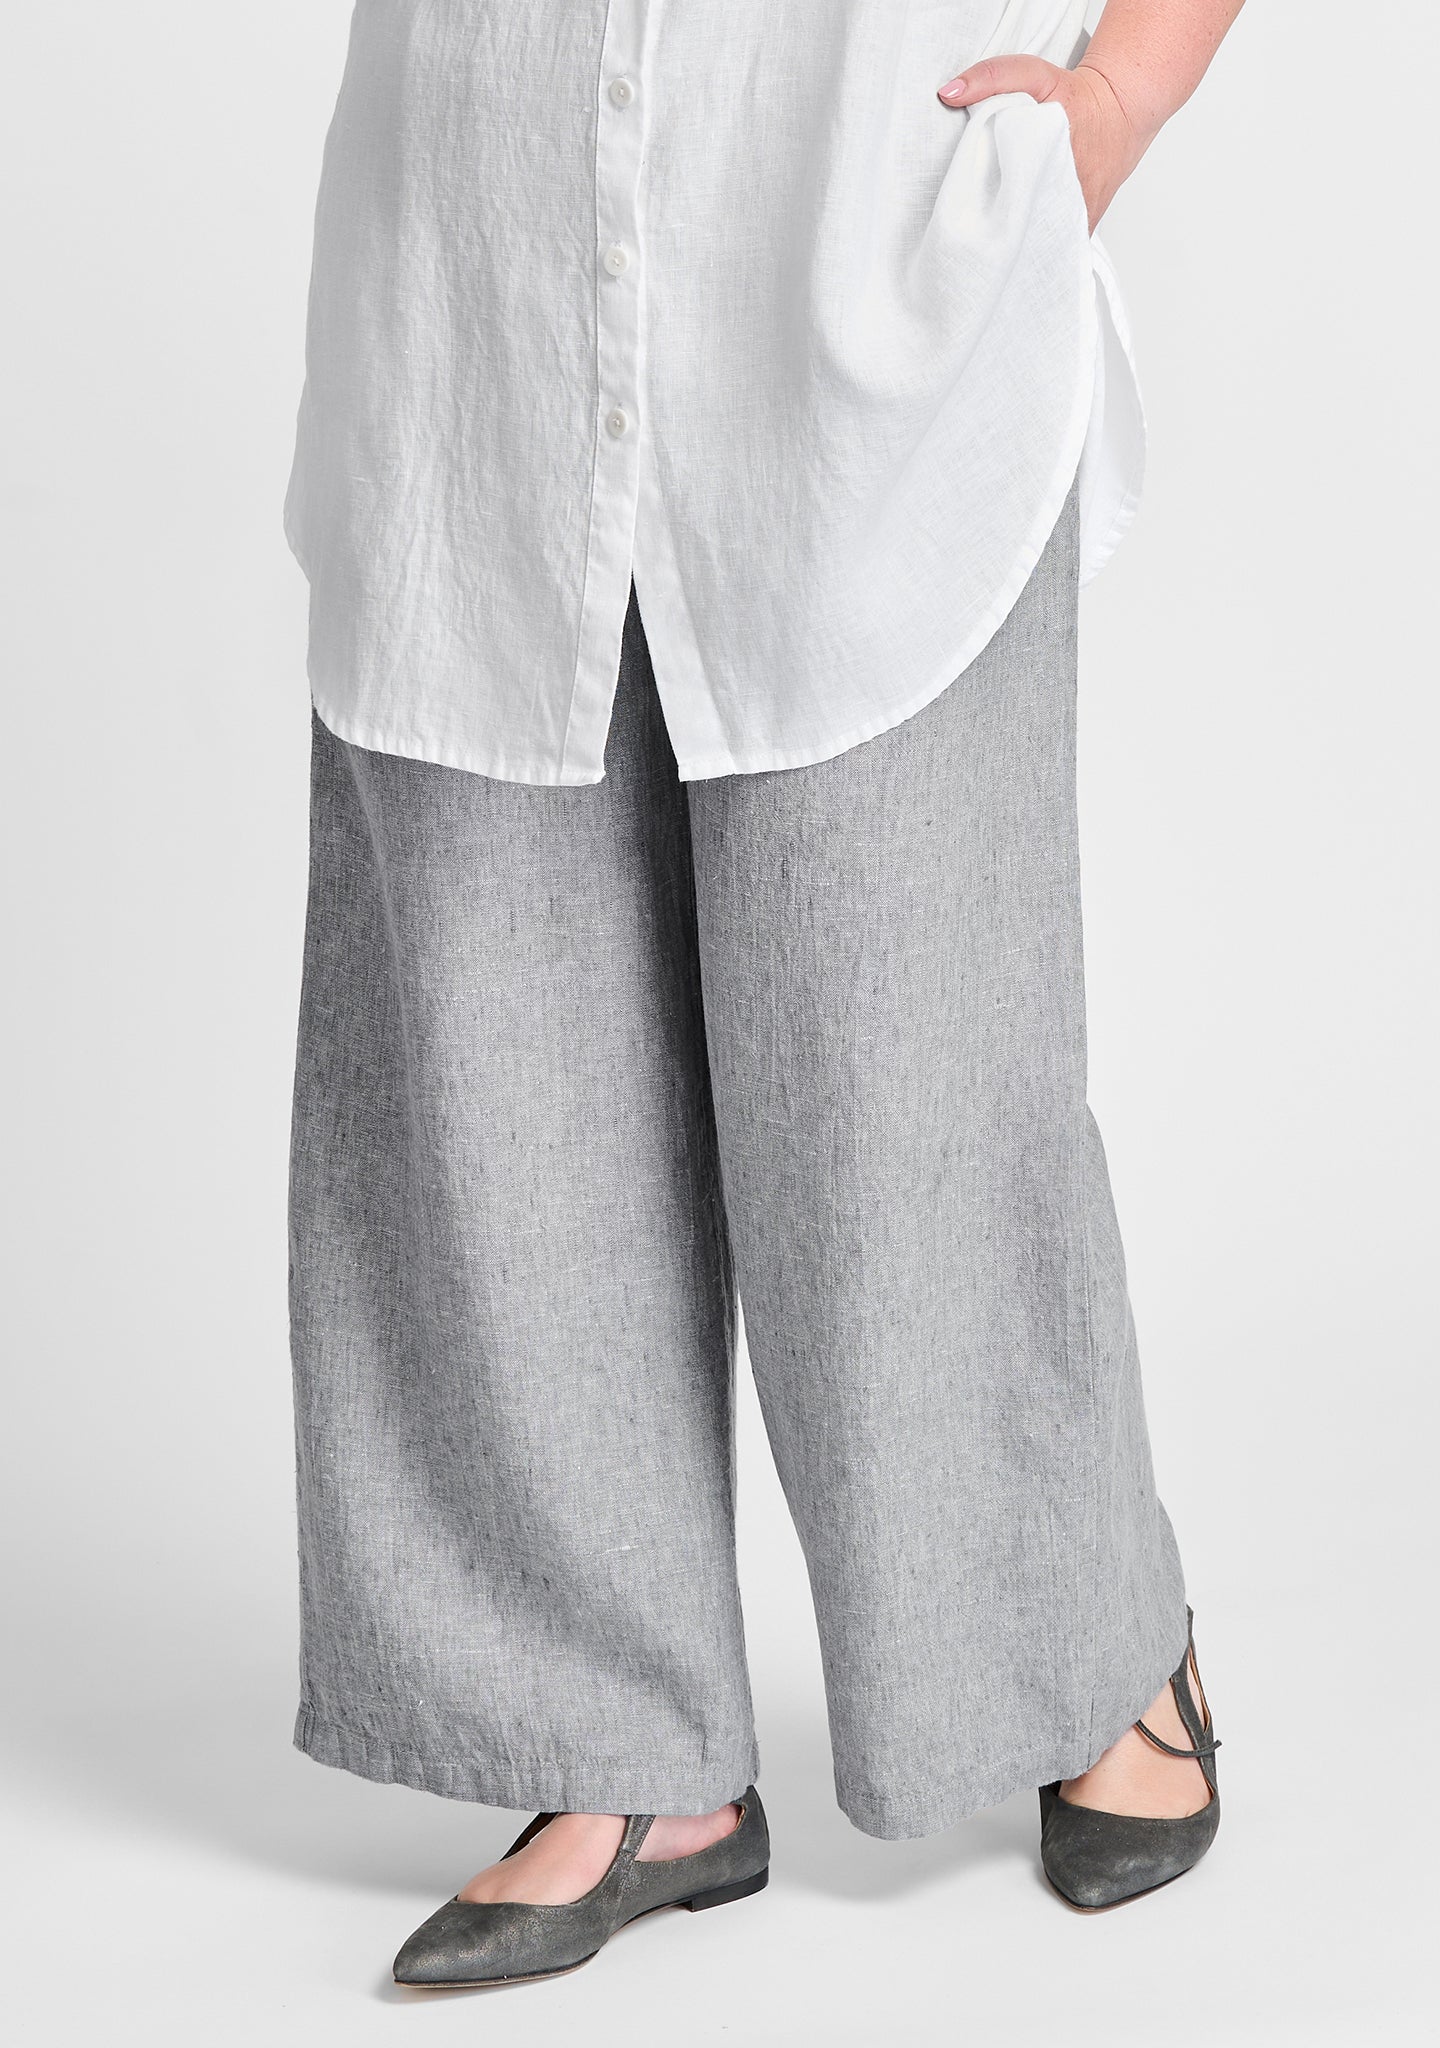 flowing pant linen pants with elastic waist grey